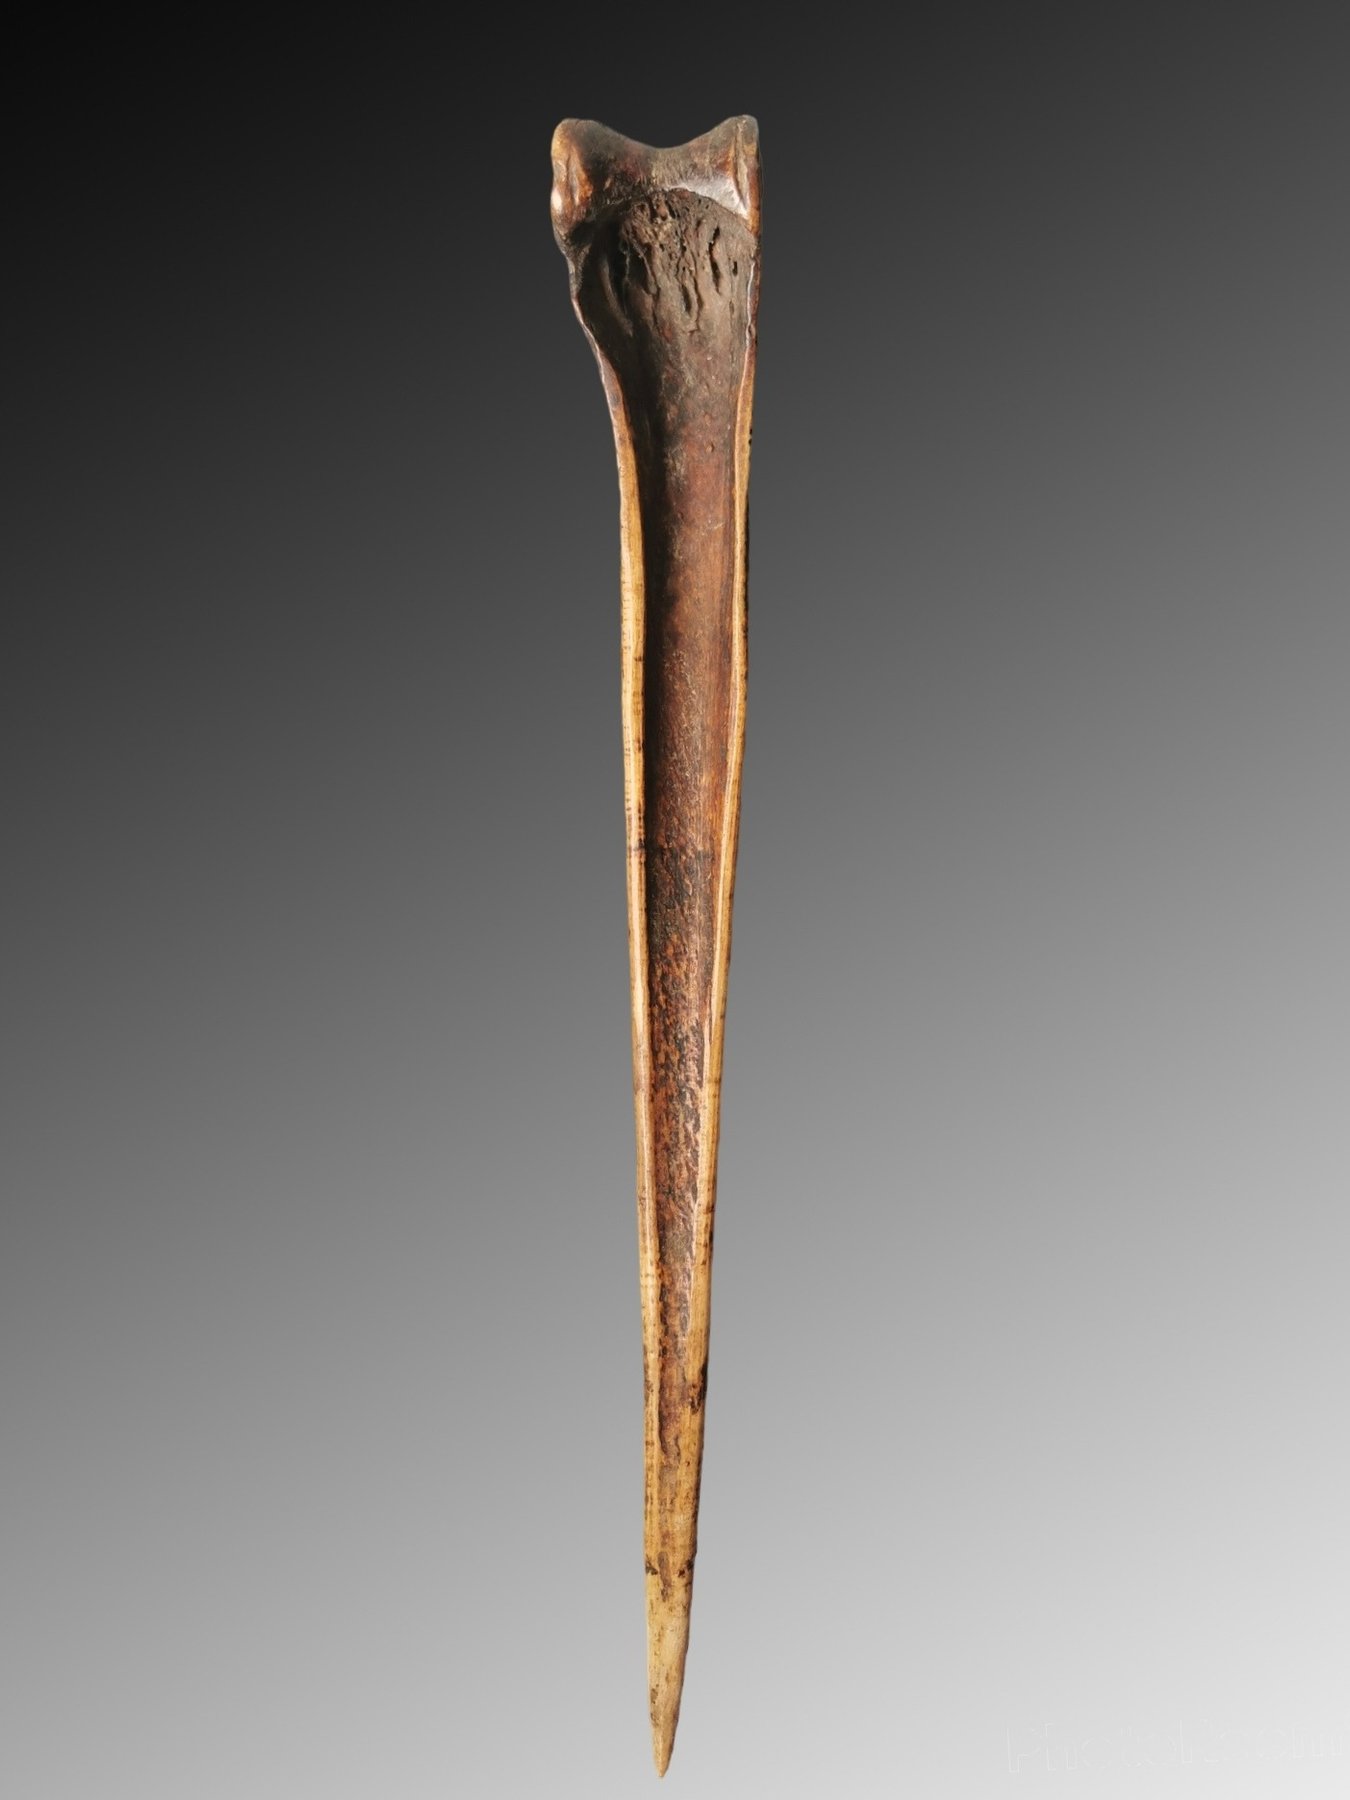 Dagger - Cassowary bone - Abelam - Maprik, Papua New Guinea - Catawiki